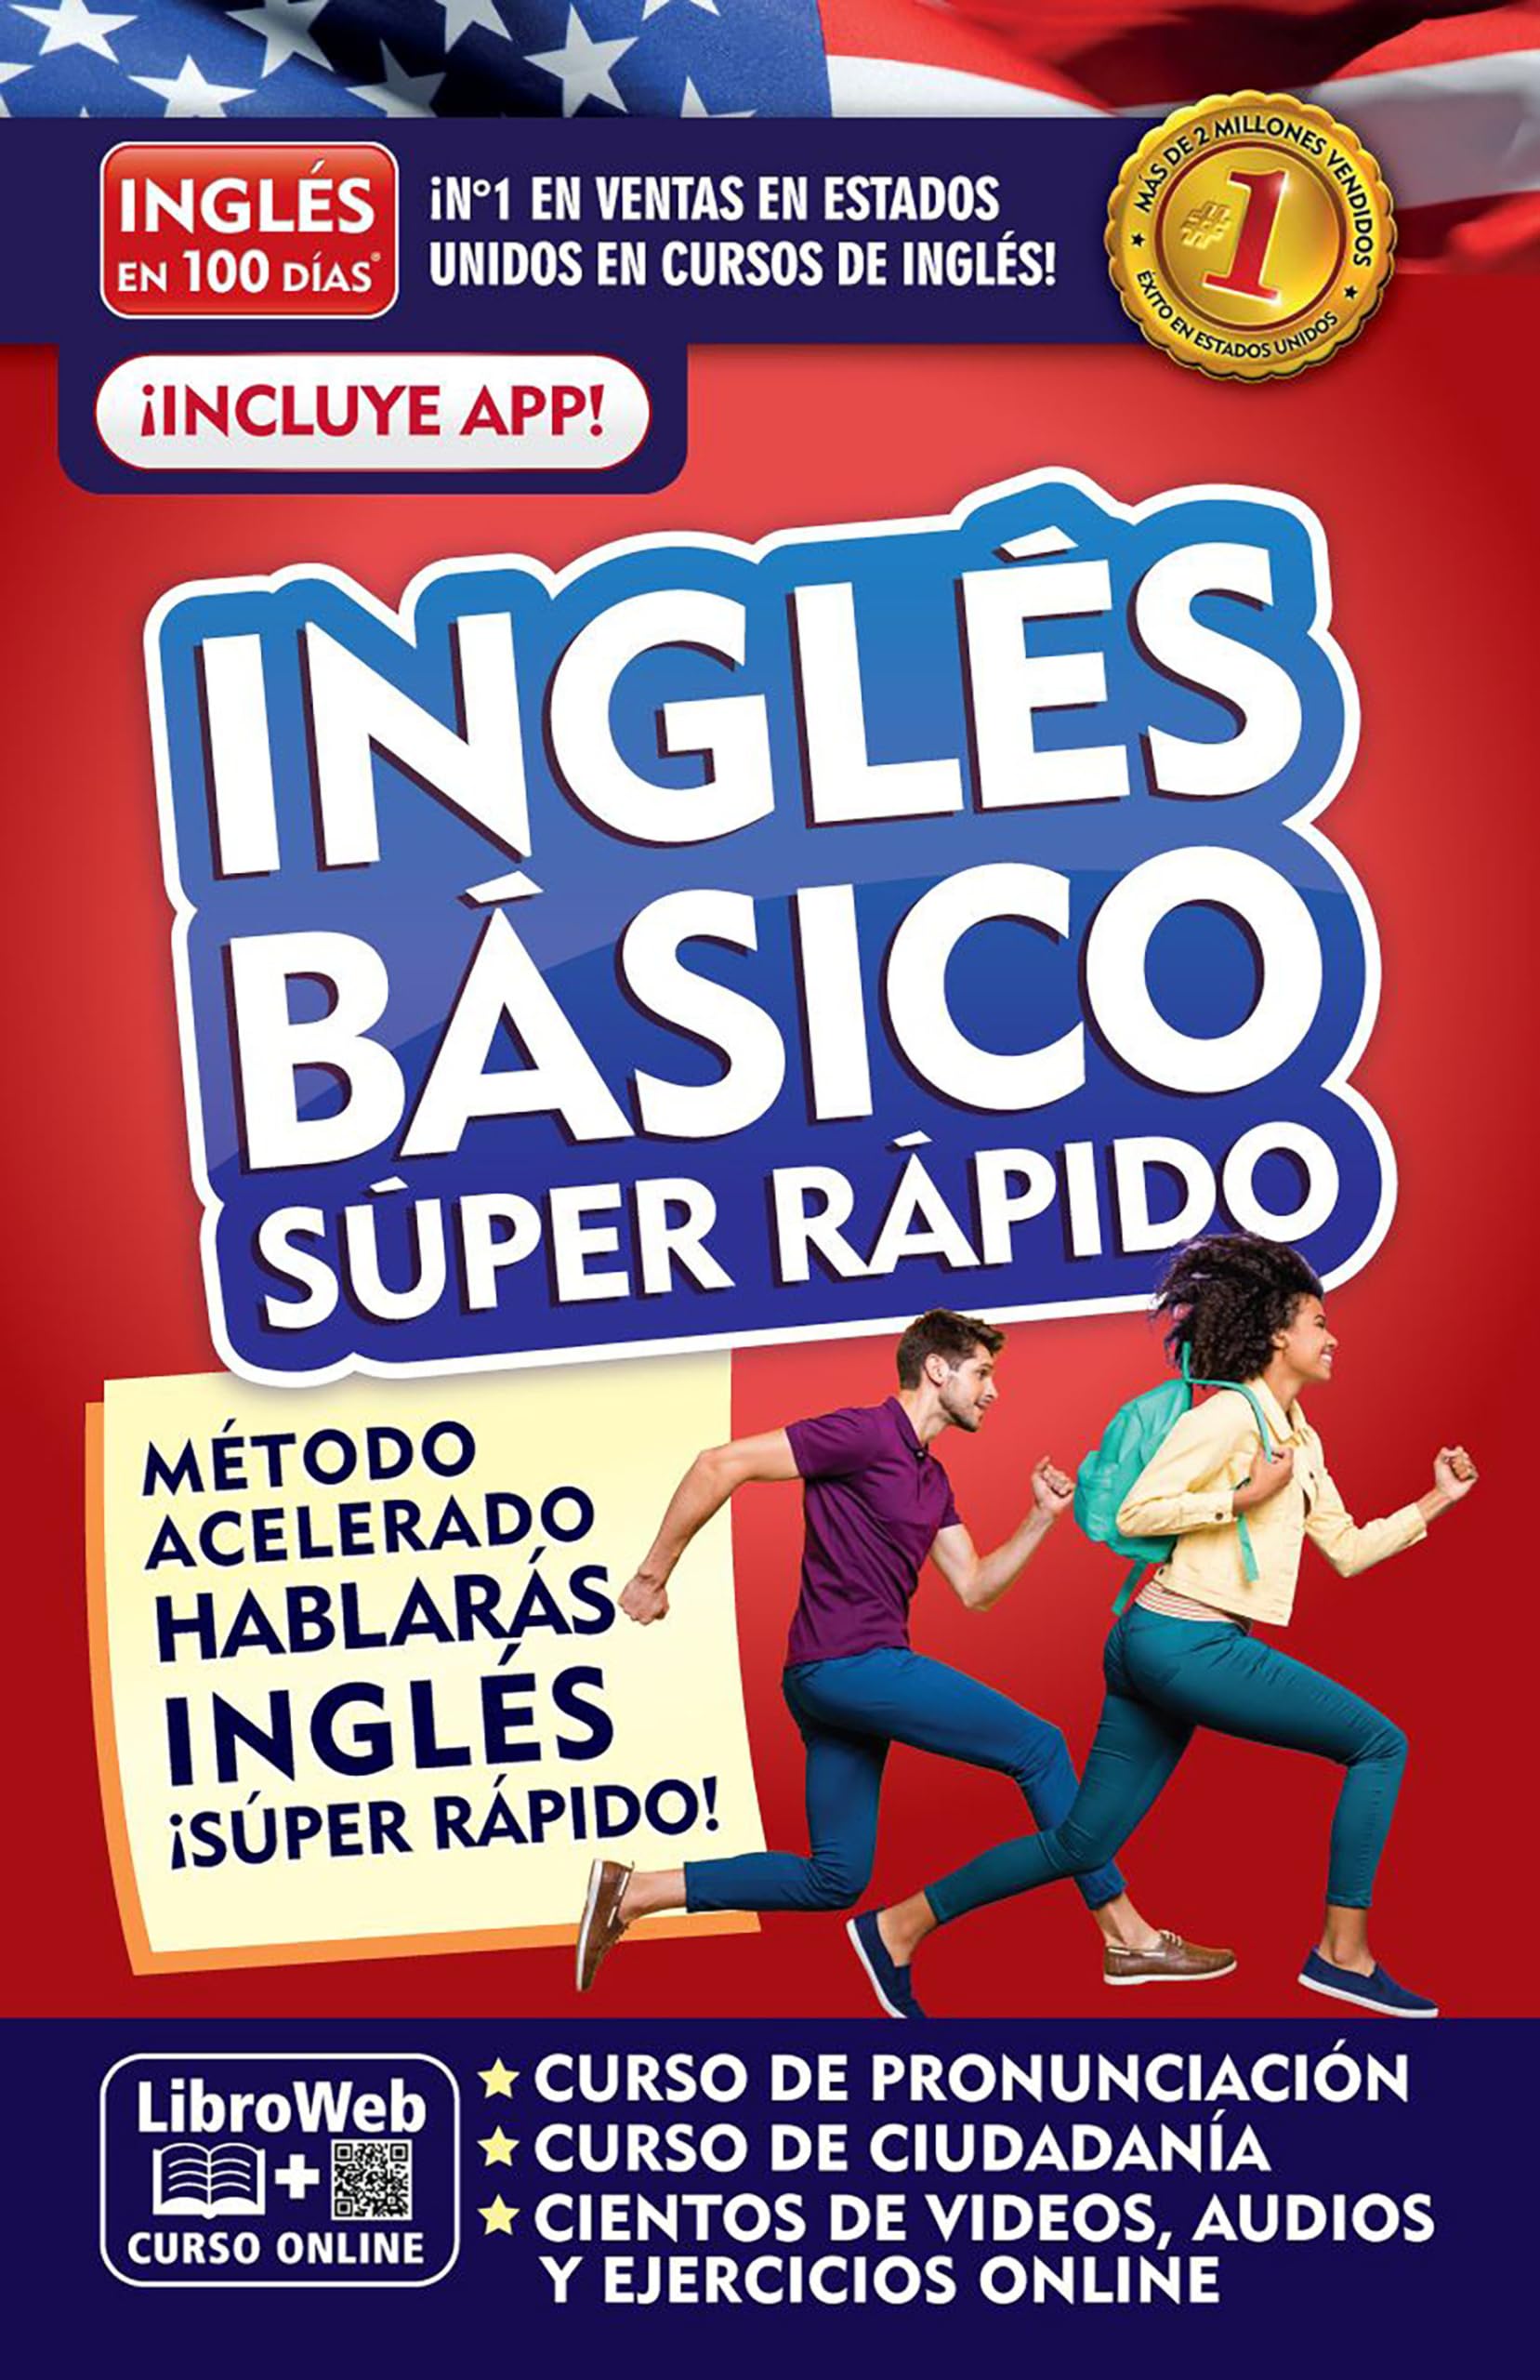 Inglés en 100 días. Inglés básico súper rápido / English in 100 Days. Basic Engl ish Super Quick (Spanish Edition)